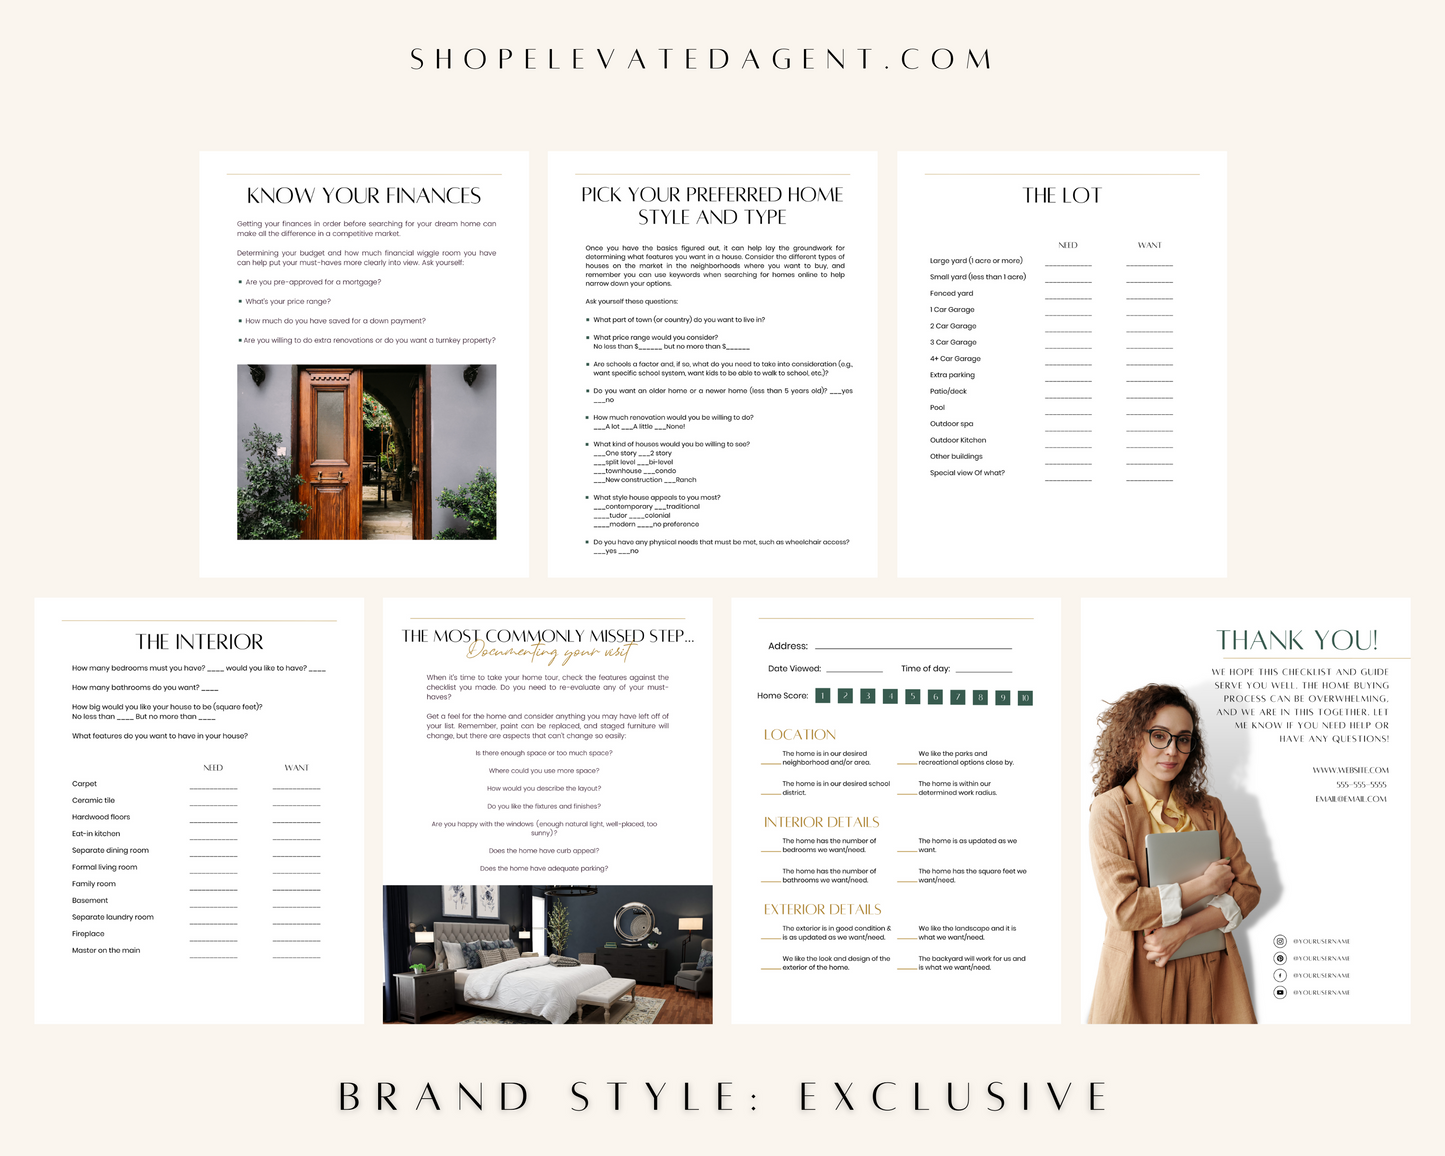 Dream Home Checklist - Exclusive Brand Style